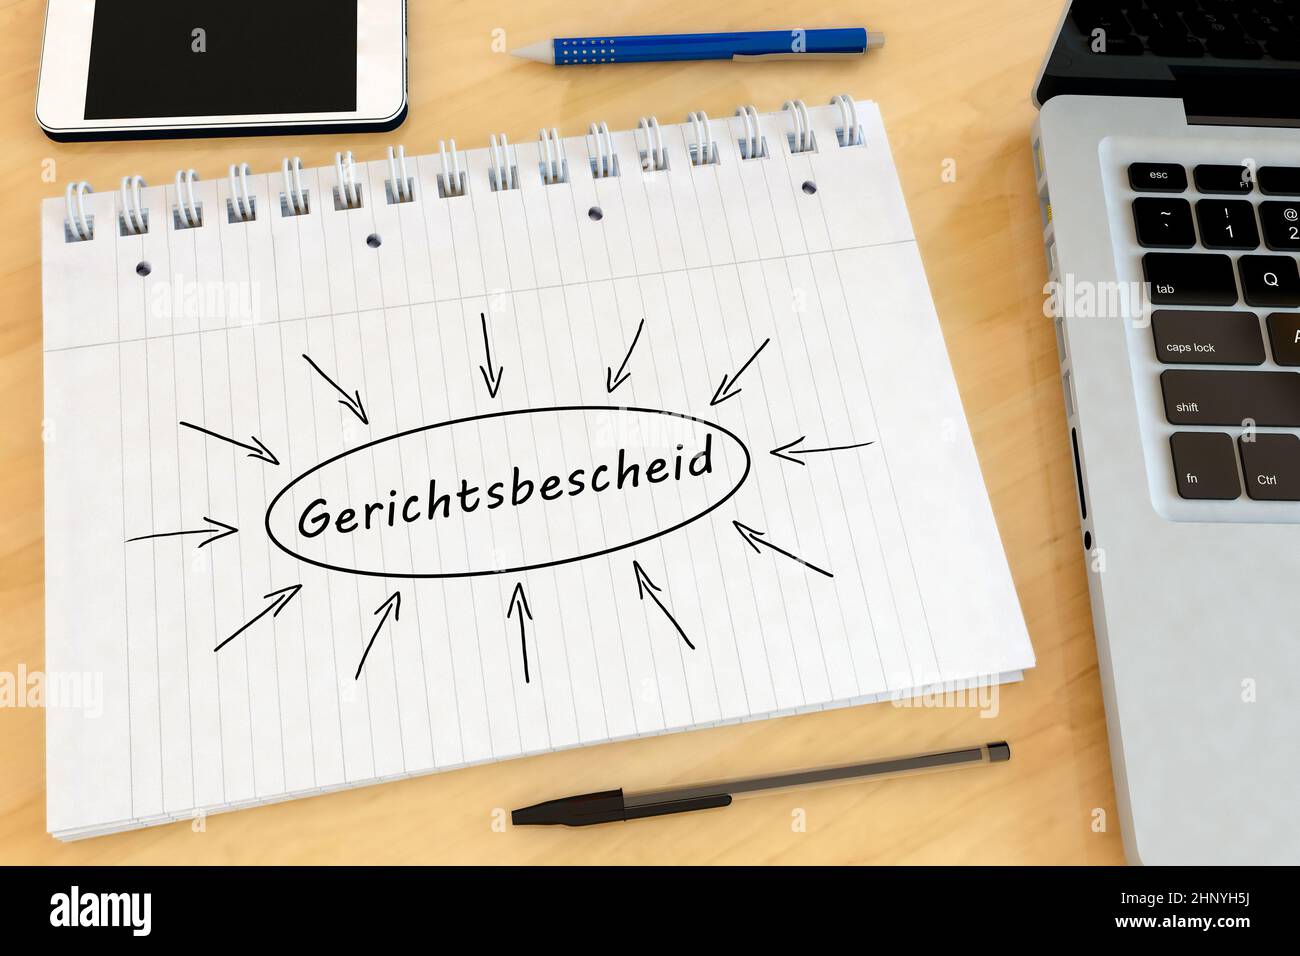 Gerichtsbescheid - german word for court order or court decision - handwritten text in a notebook on a desk - 3d render illustration. Stock Photo